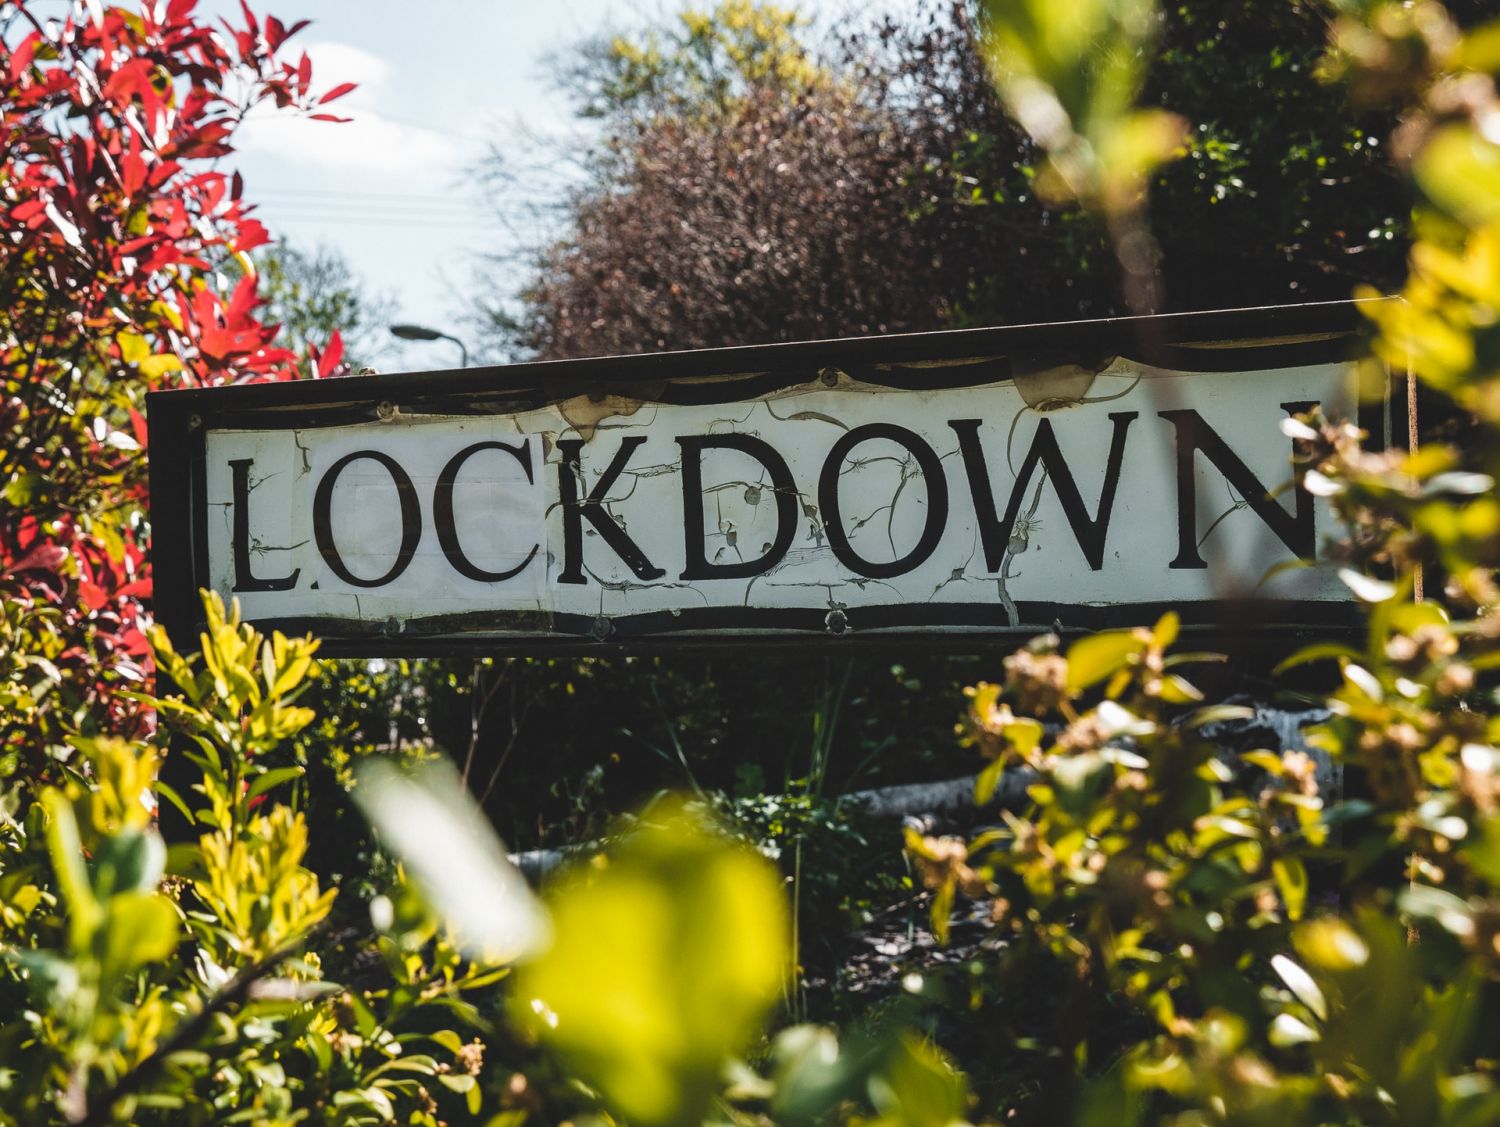 Lockdown sign